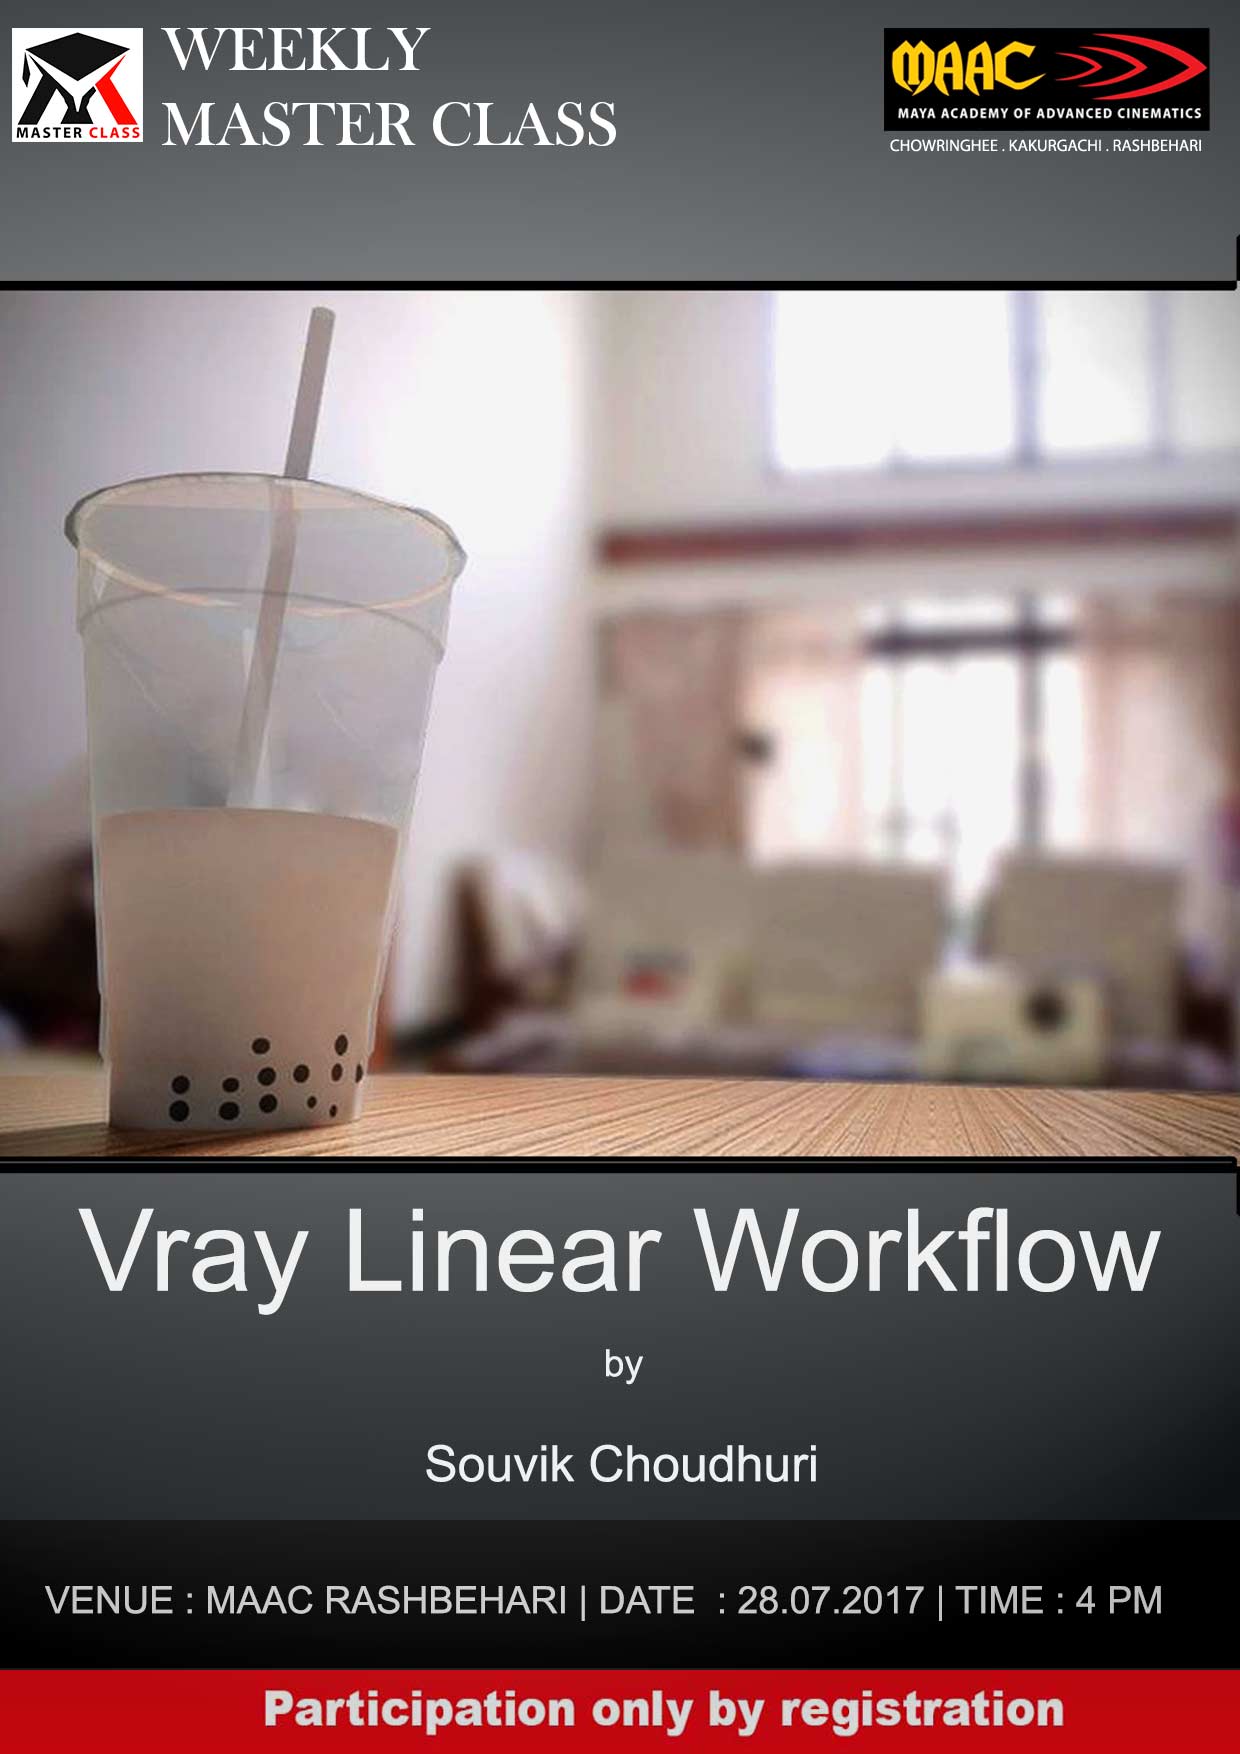 Weekly Master Class on Vray Linear Workflow - Souvik Choudhuri
